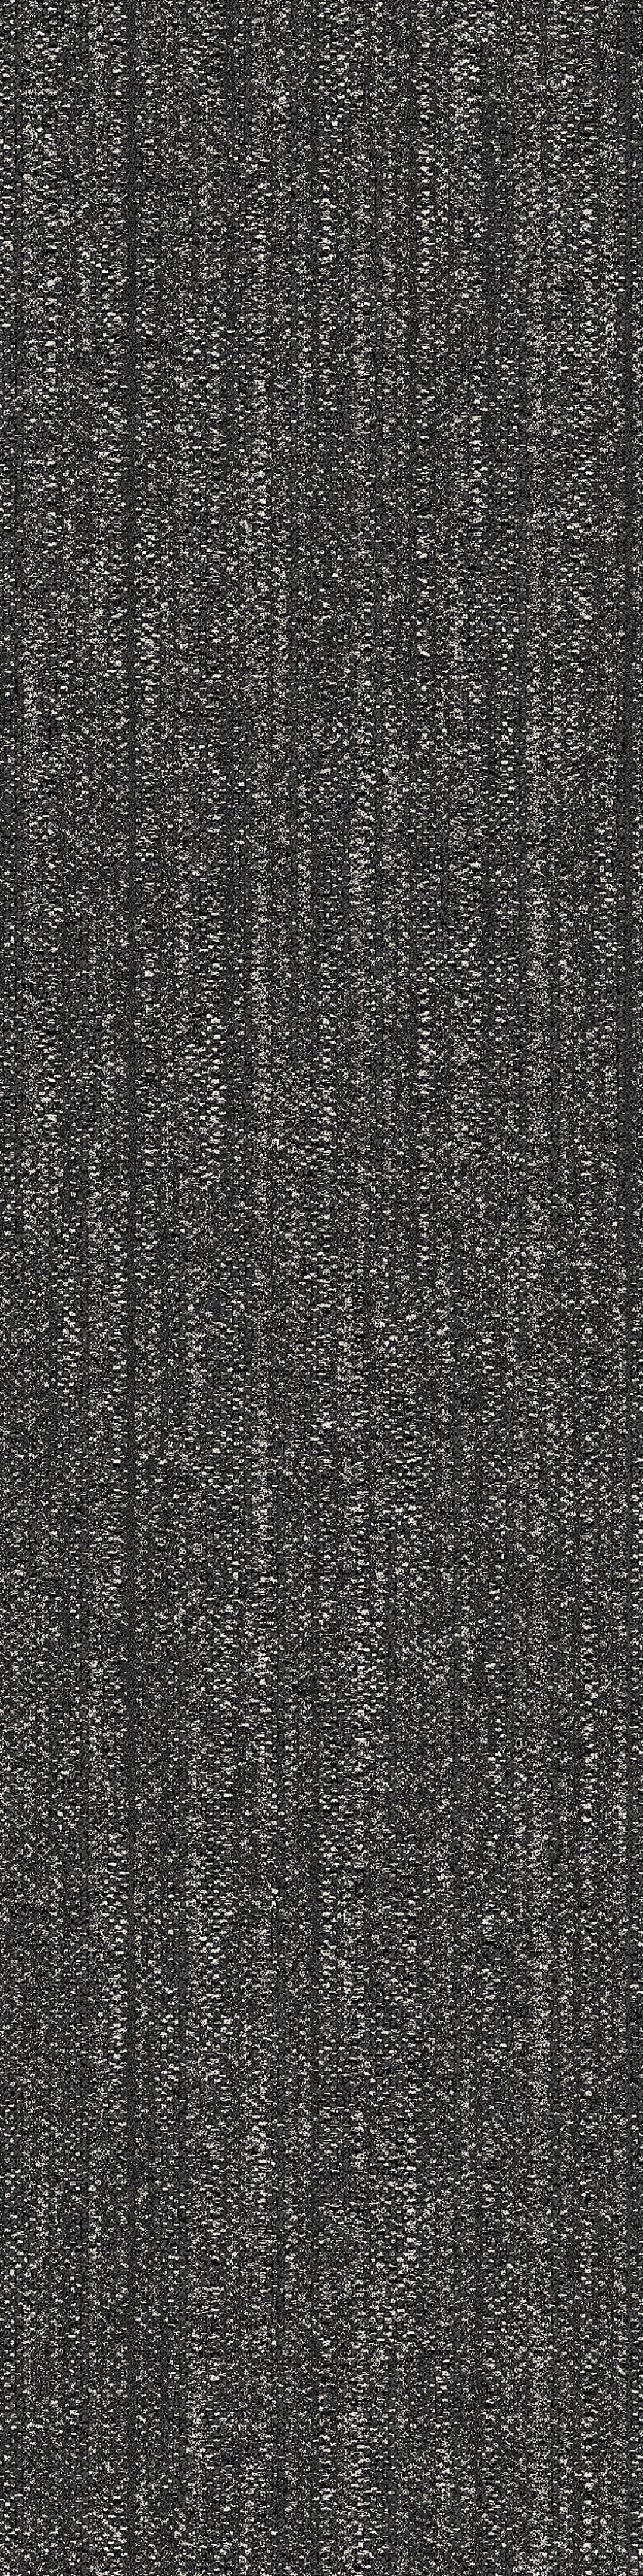 World Woven - WW880 - Black Loom from Inzide